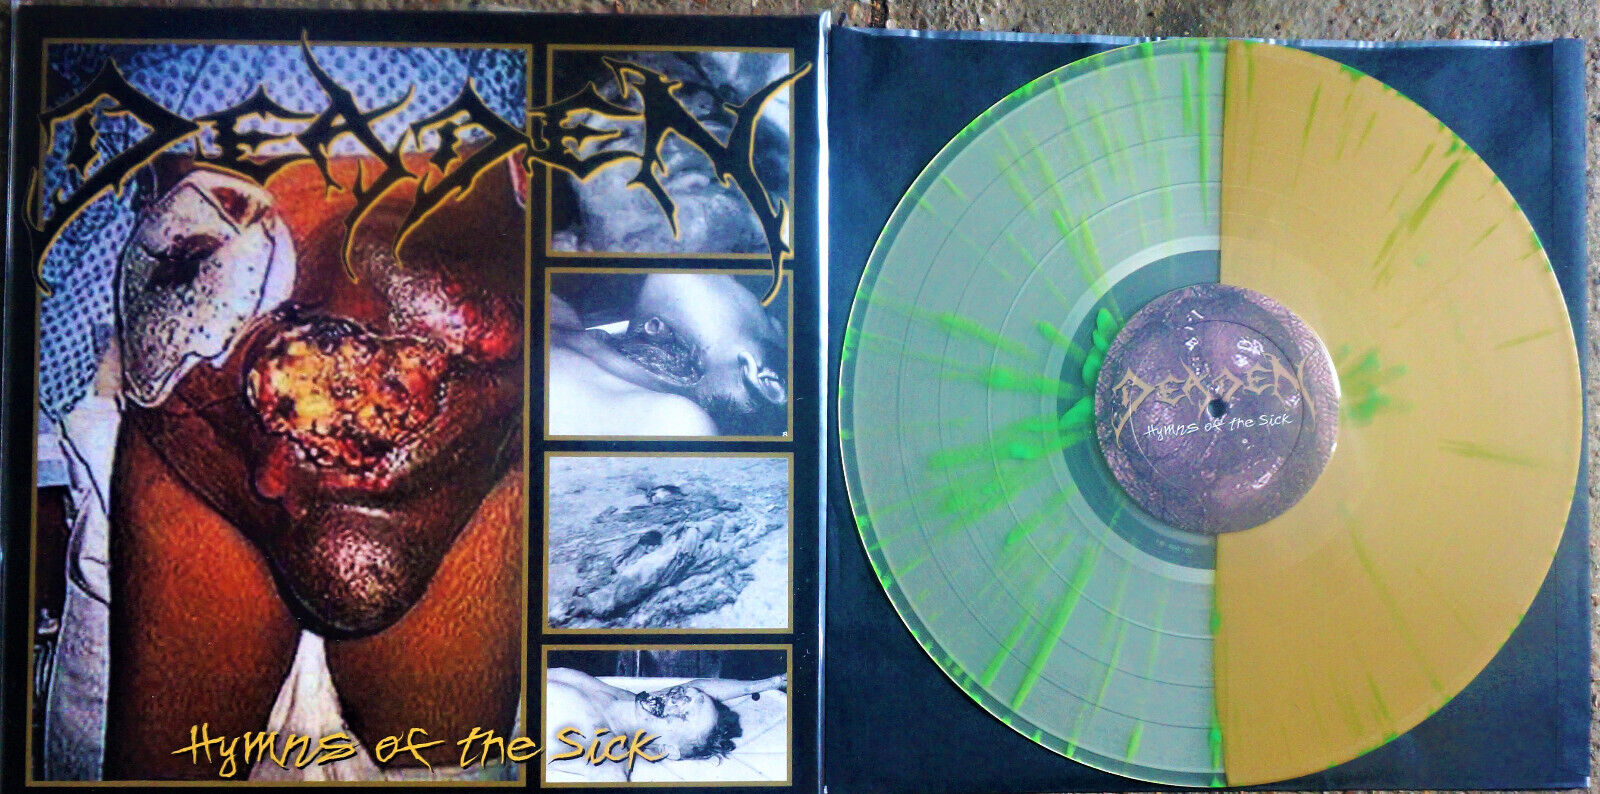 Deaden-Hymns of the Sick LTD LP Fleshgrind,Devourment,Exhumed,Carcass,Lividity